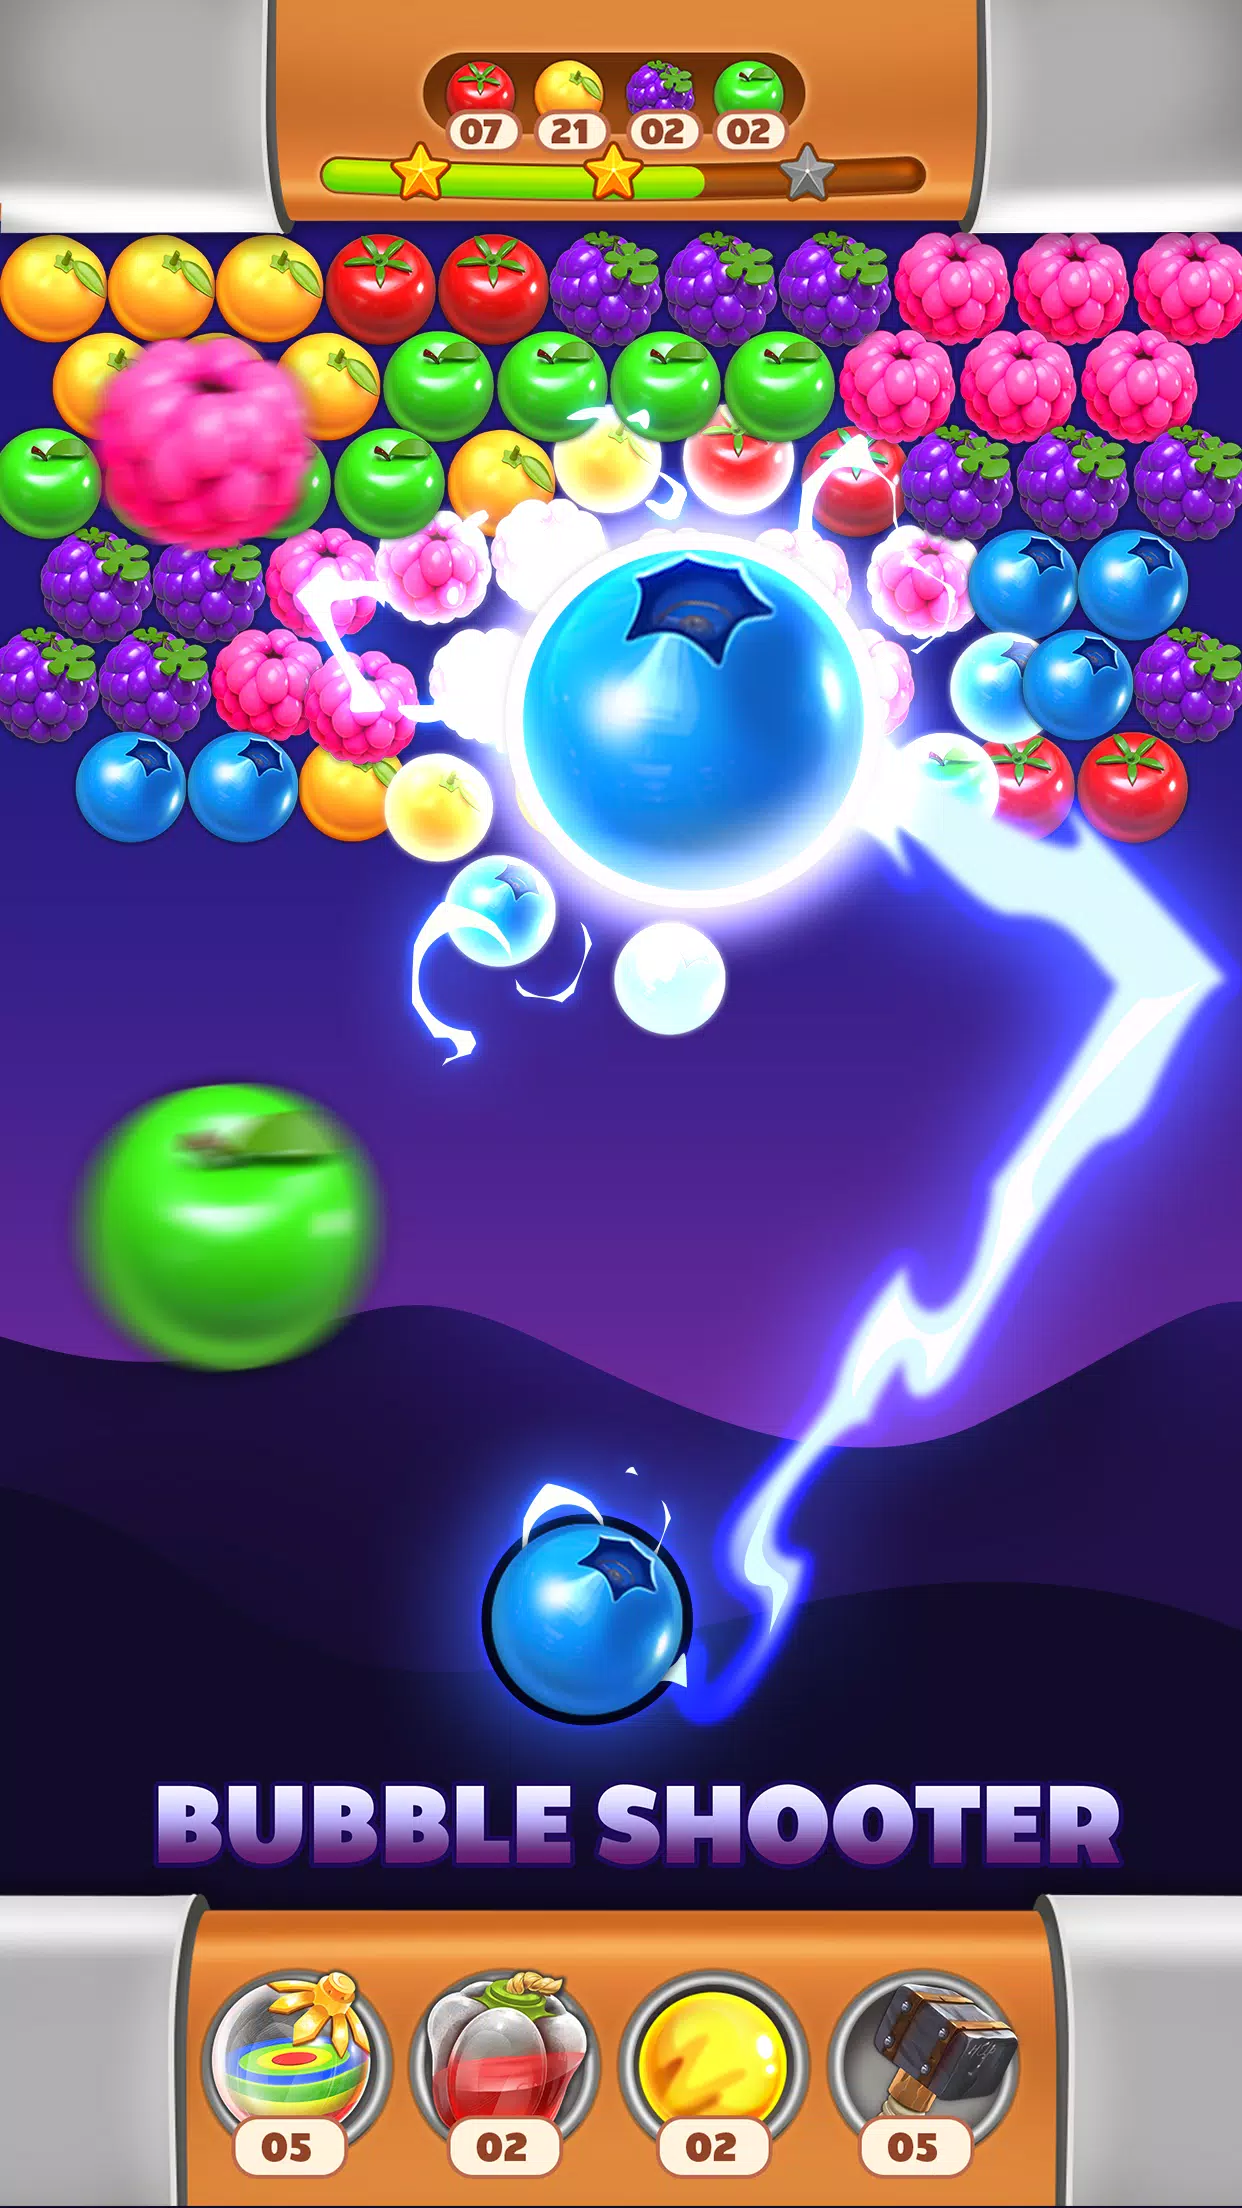 Princesa Pop APK (Android Game) - Baixar Grátis